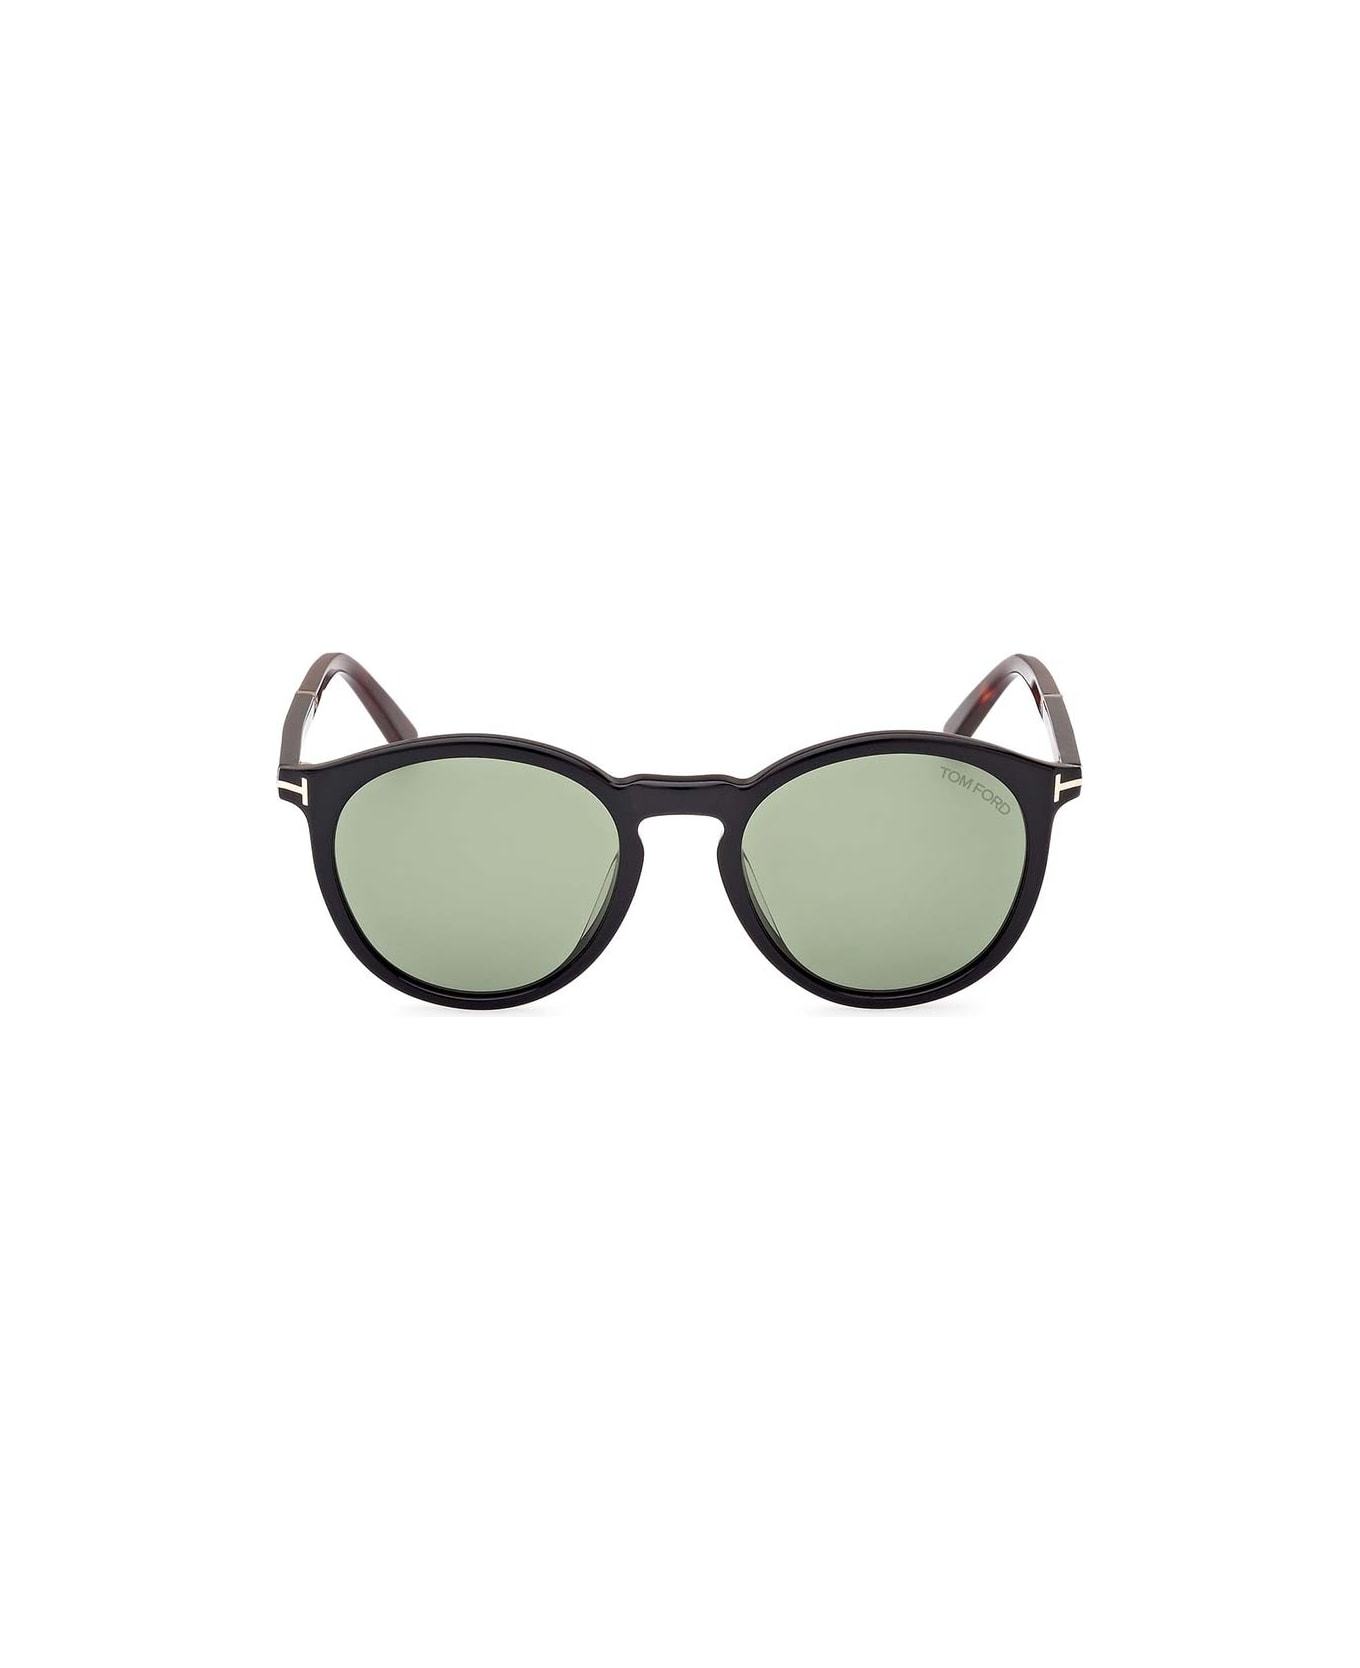 Tom Ford Eyewear Eyewear - Nero/Verde アイウェア